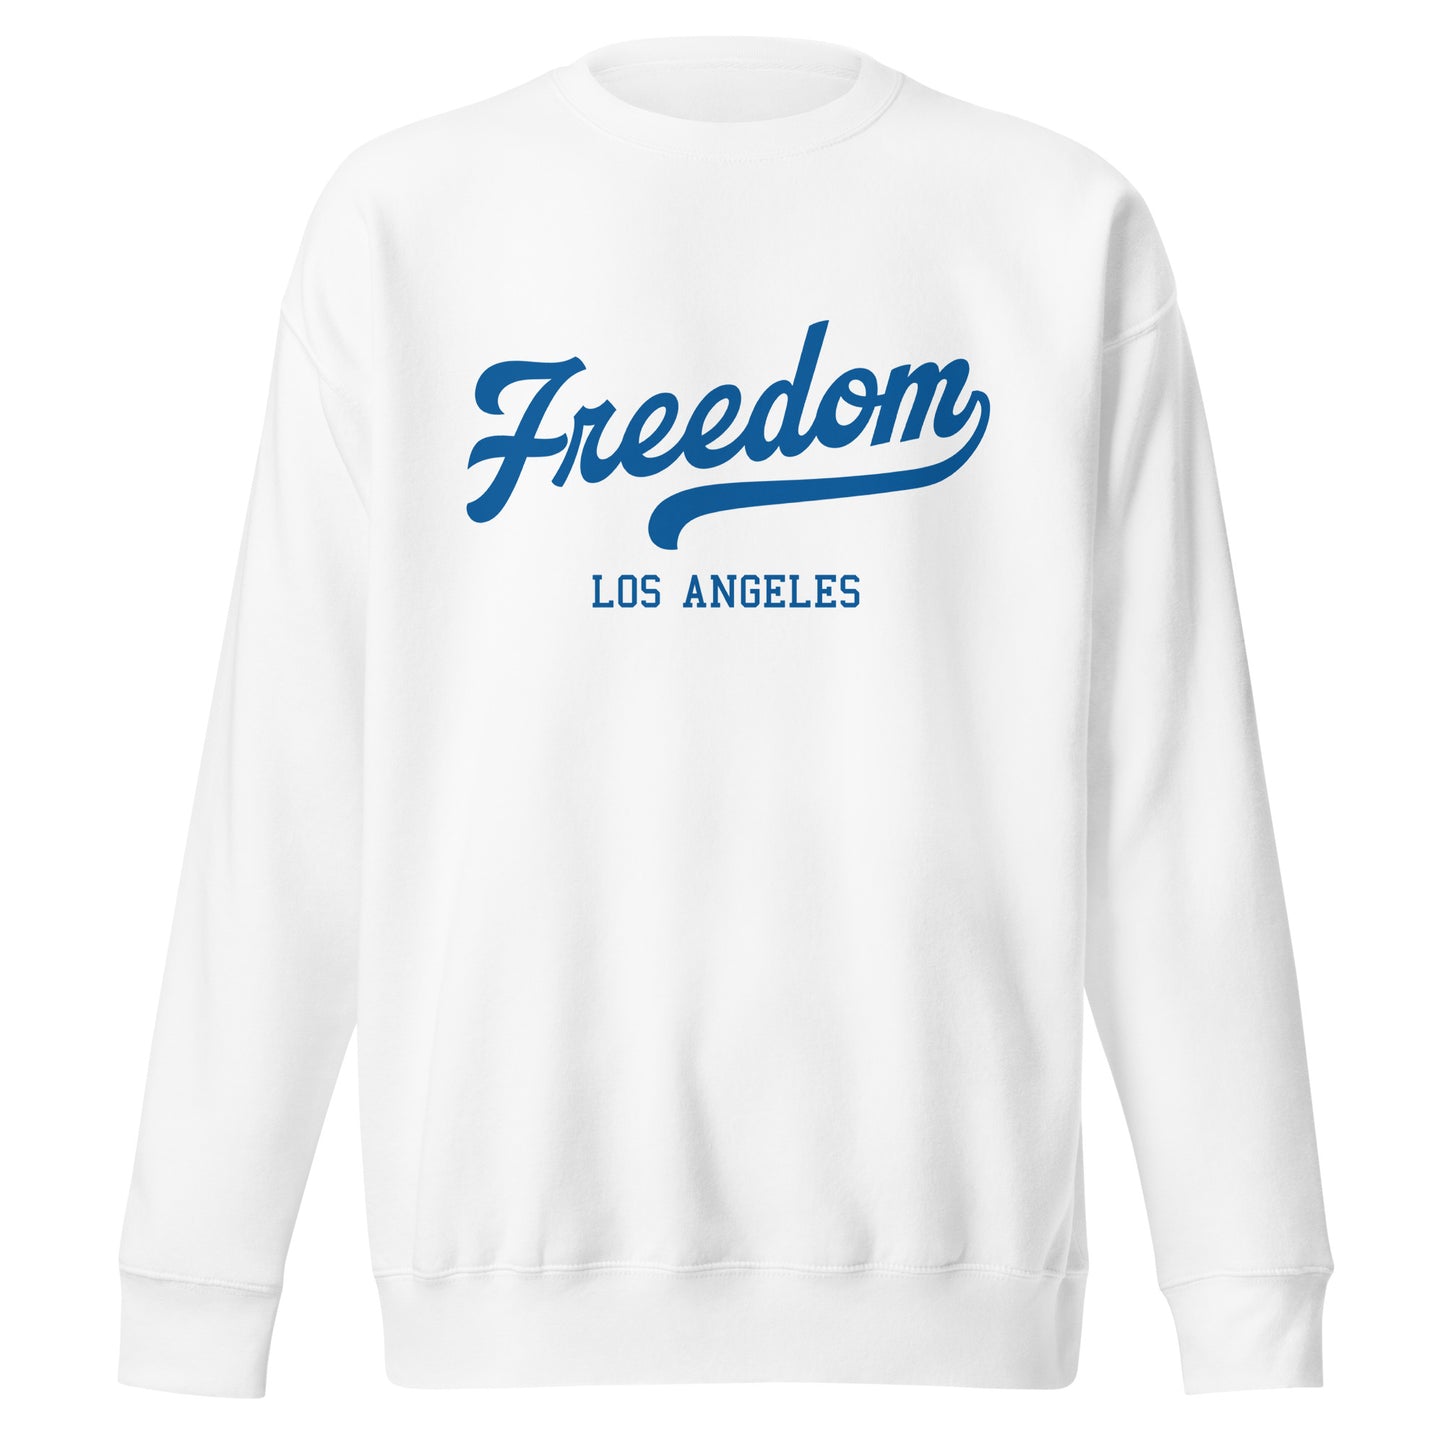 Freedom Los Angeles Sweatshirt